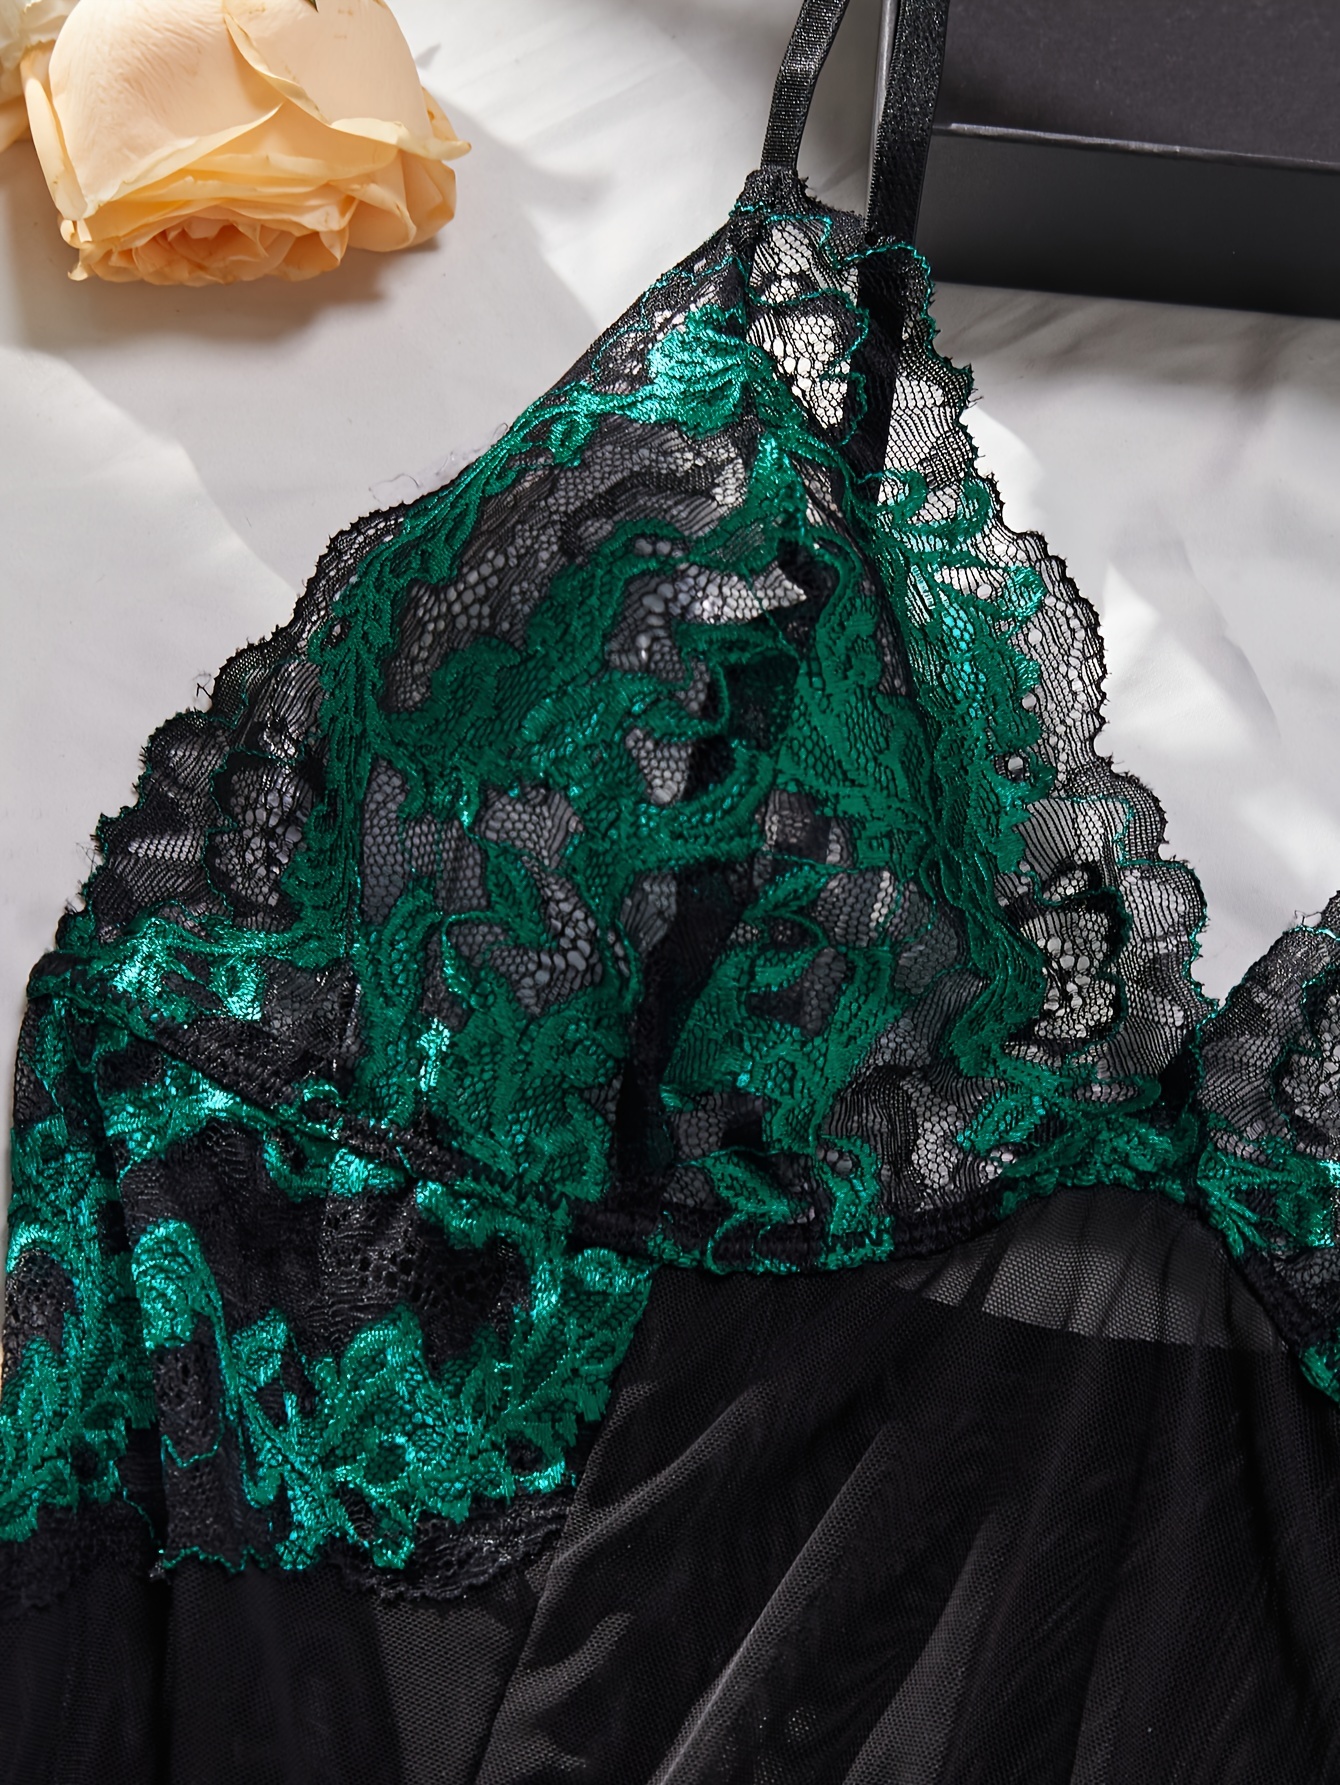 Sensual Women's Lingerie in Silk, Lace & Tulle